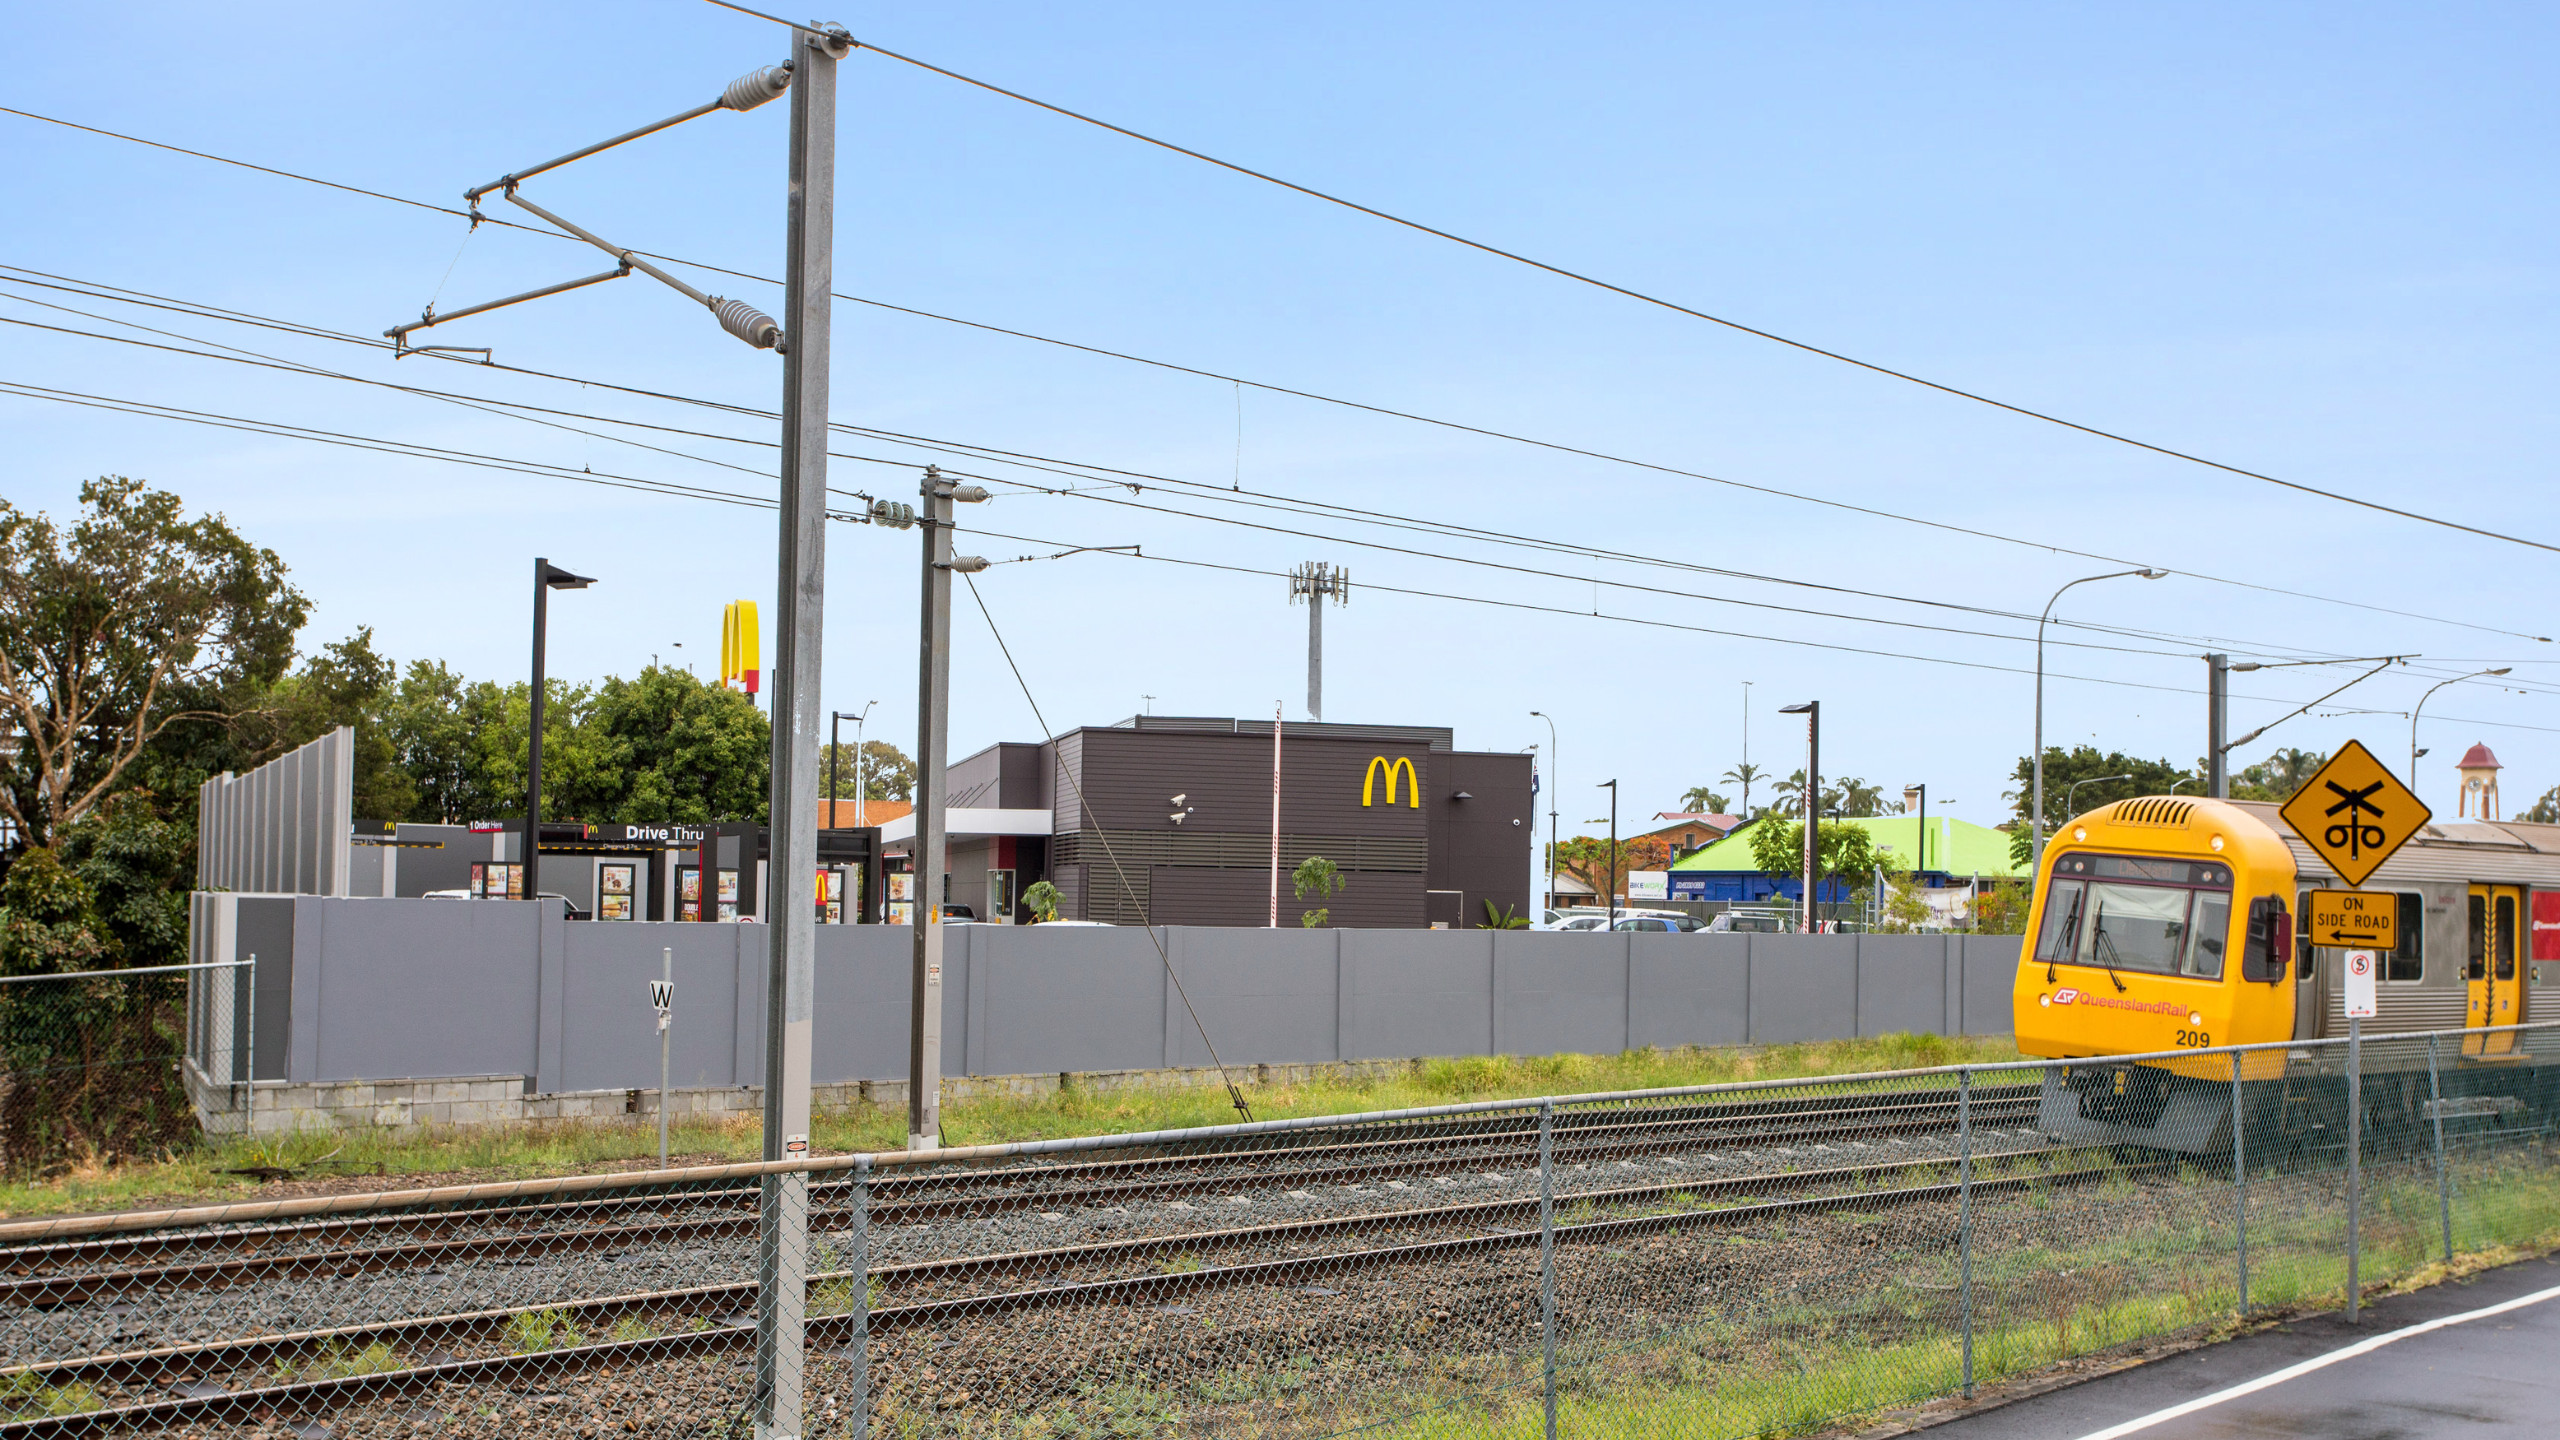 Visuals meet acoustics to protect McDonald's restaurant from railway